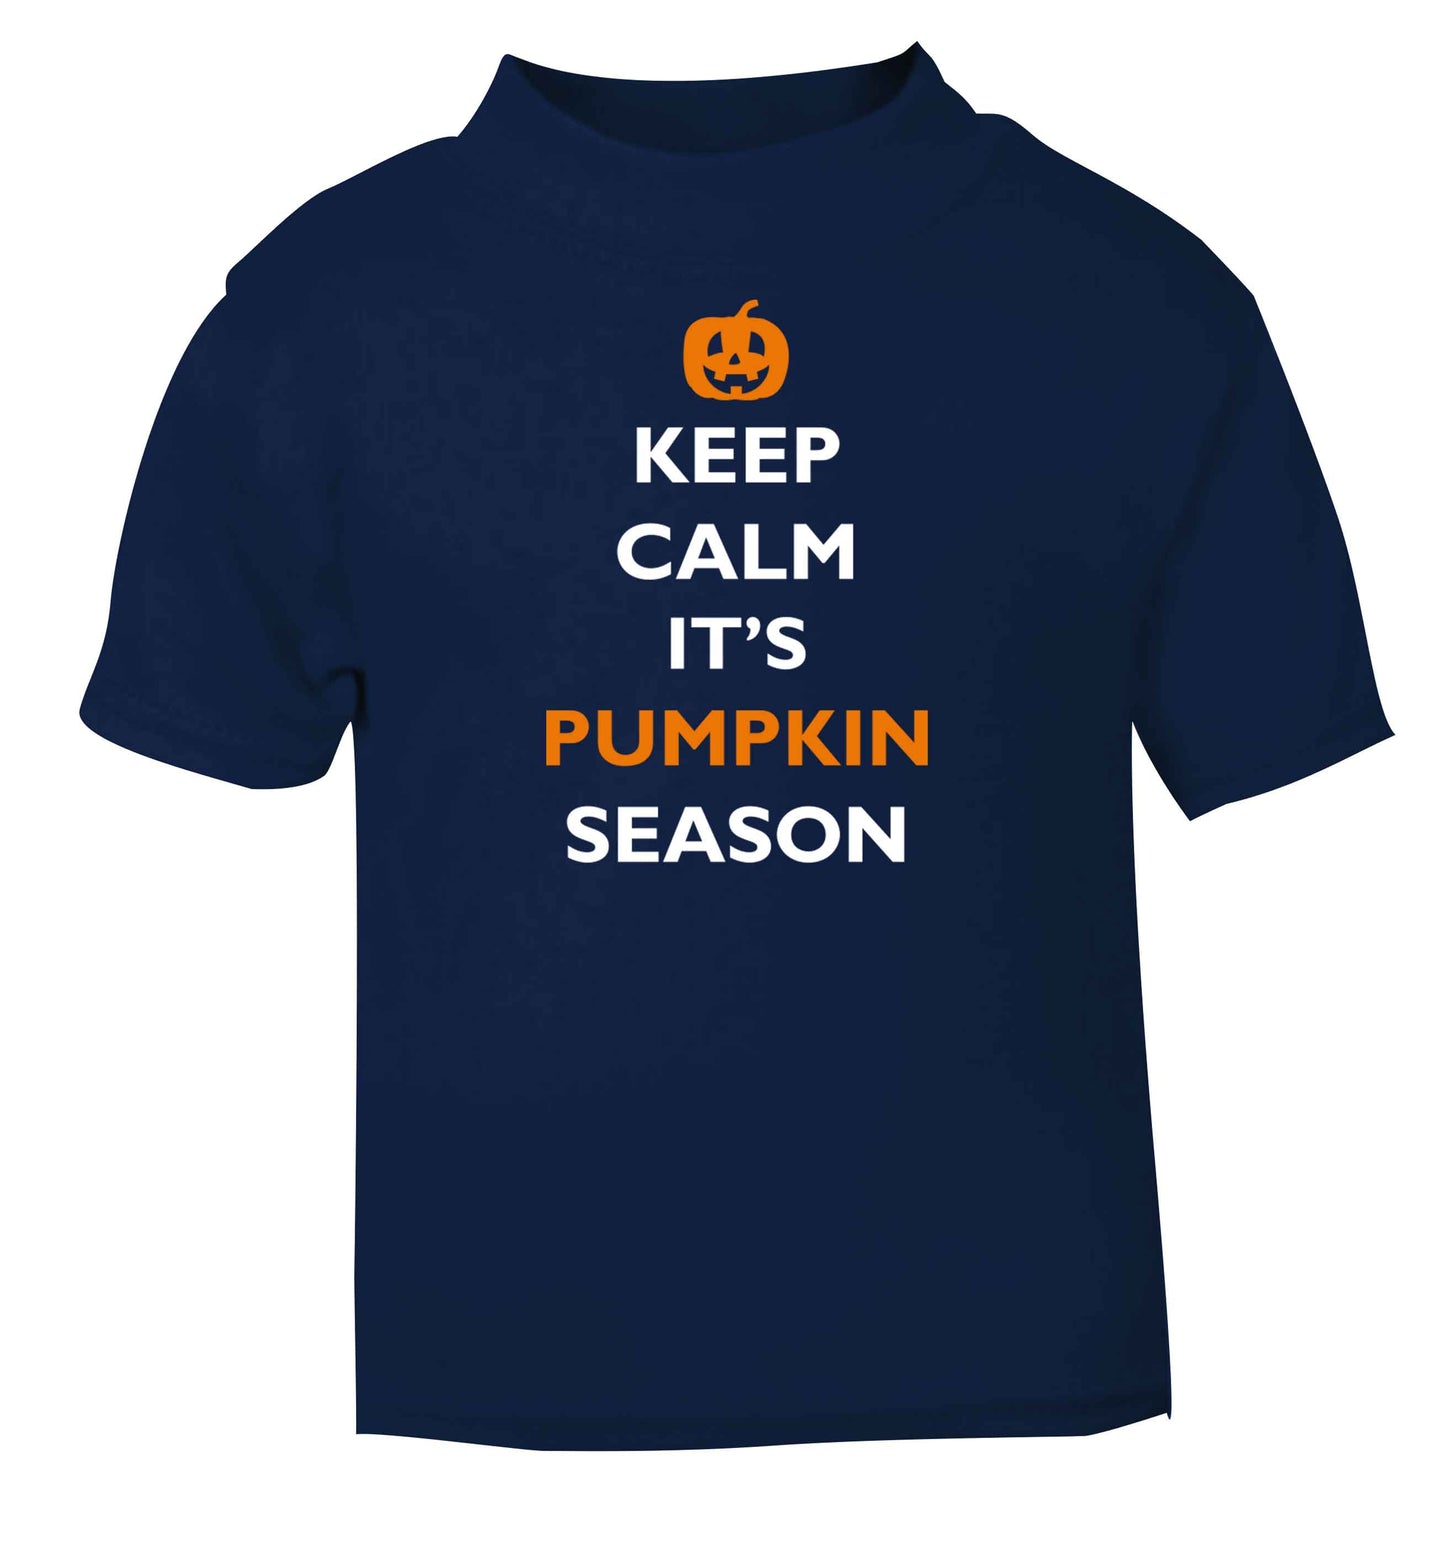 Calm Pumpkin Season navy baby toddler Tshirt 2 Years